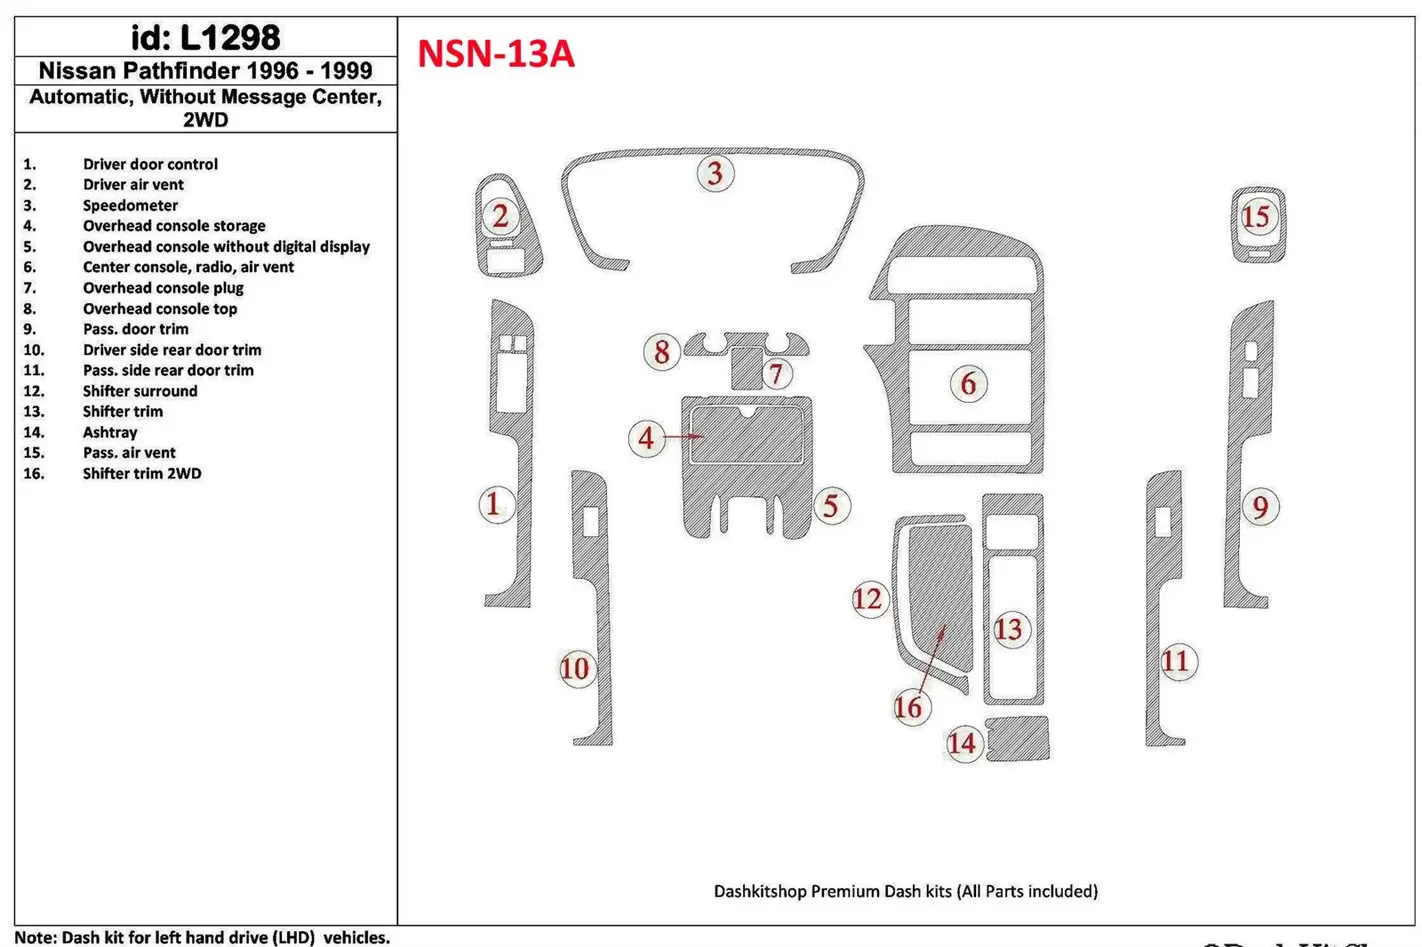 Nissan Pathfinder 1996-1999 Automatic Gearbox, Without Message Center, 2WD, 16 Parts set Interior BD Dash Trim Kit